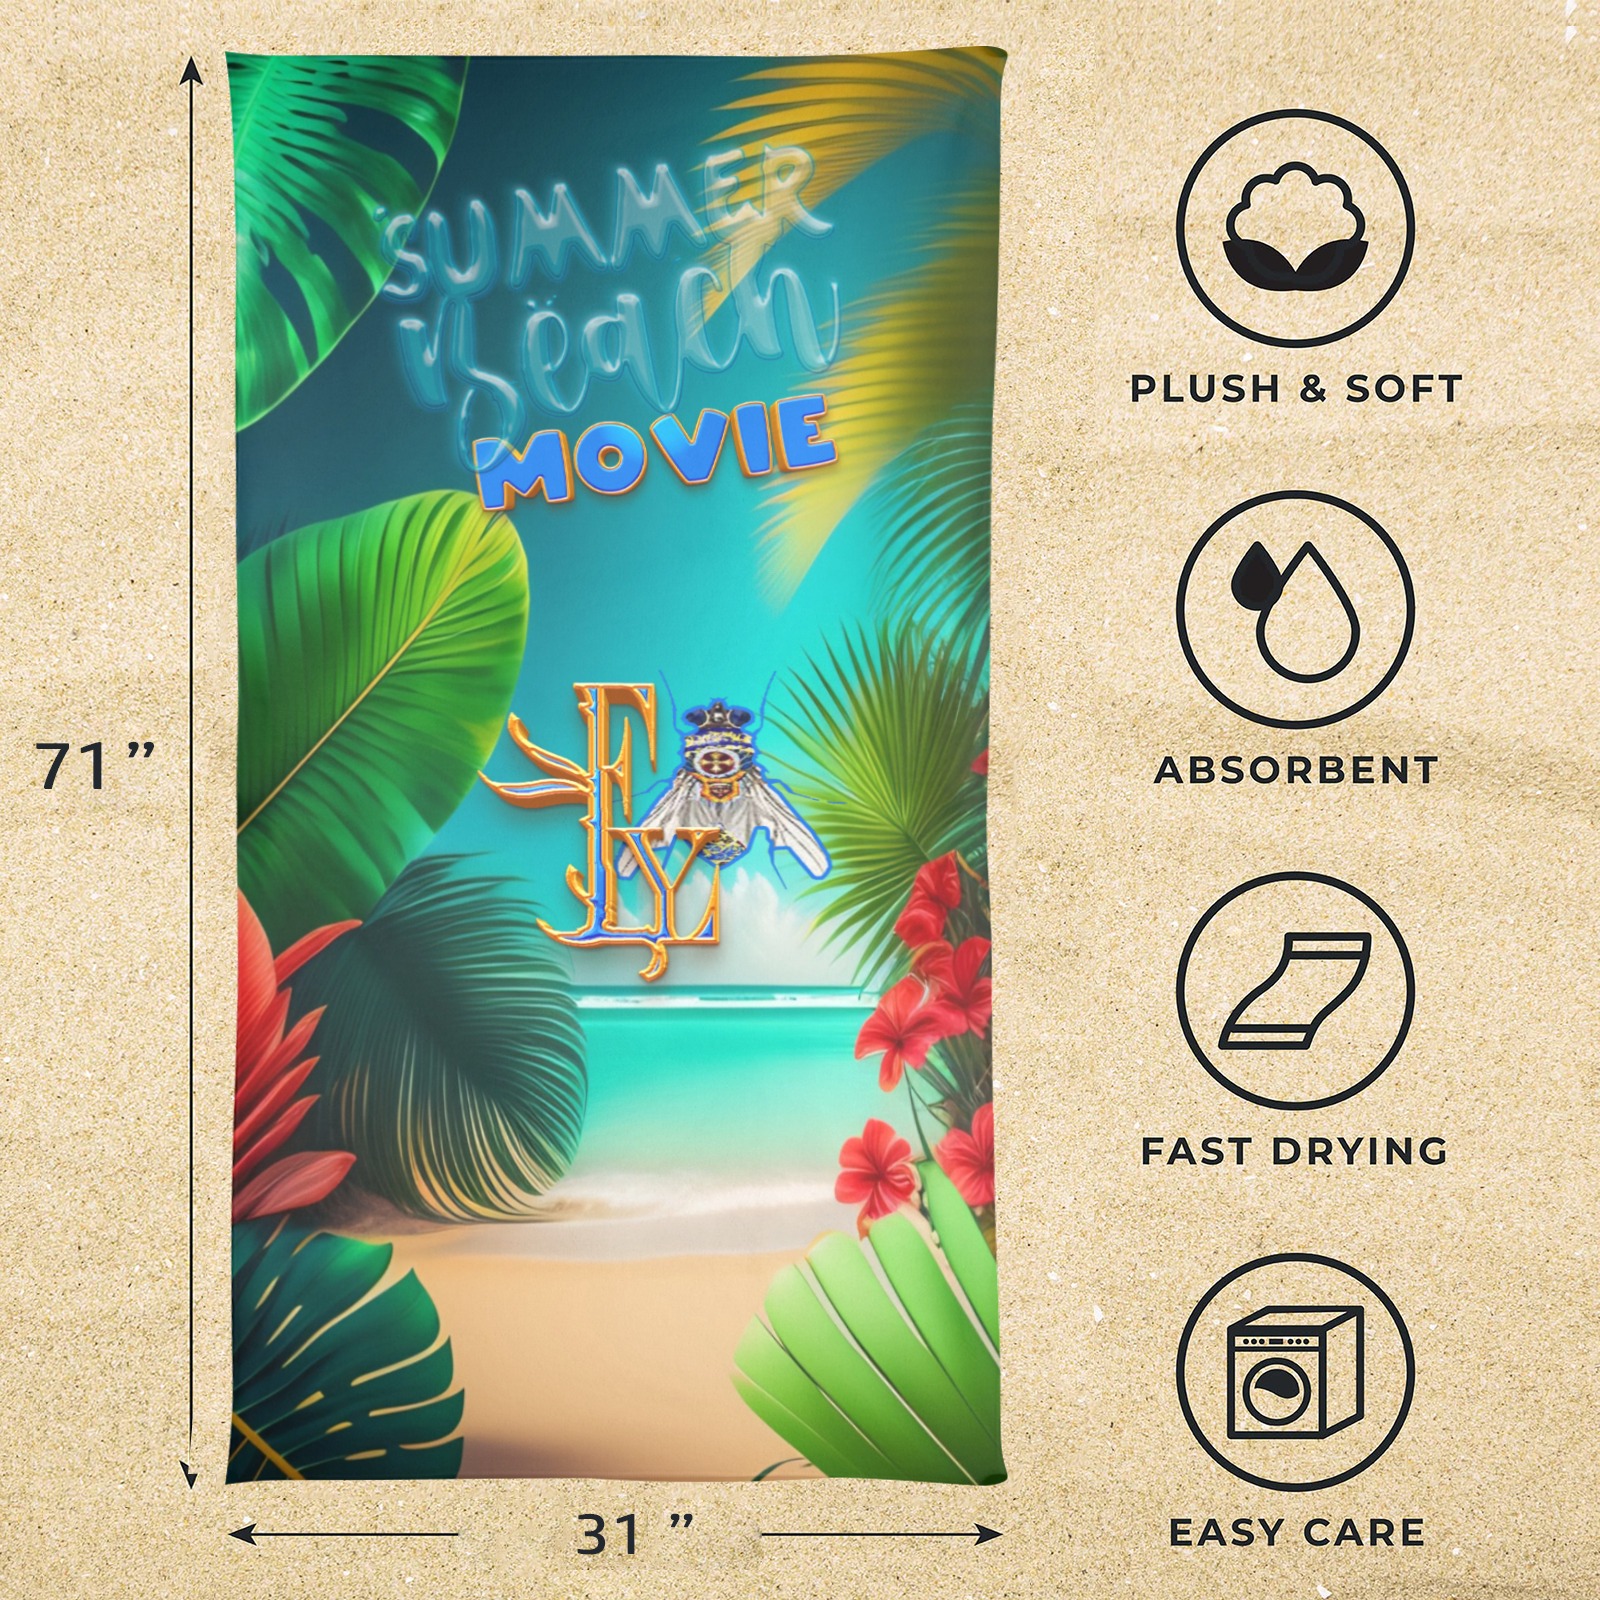 Summer Beach Movie Collectable Fly Beach Towel 31"x71"(NEW)